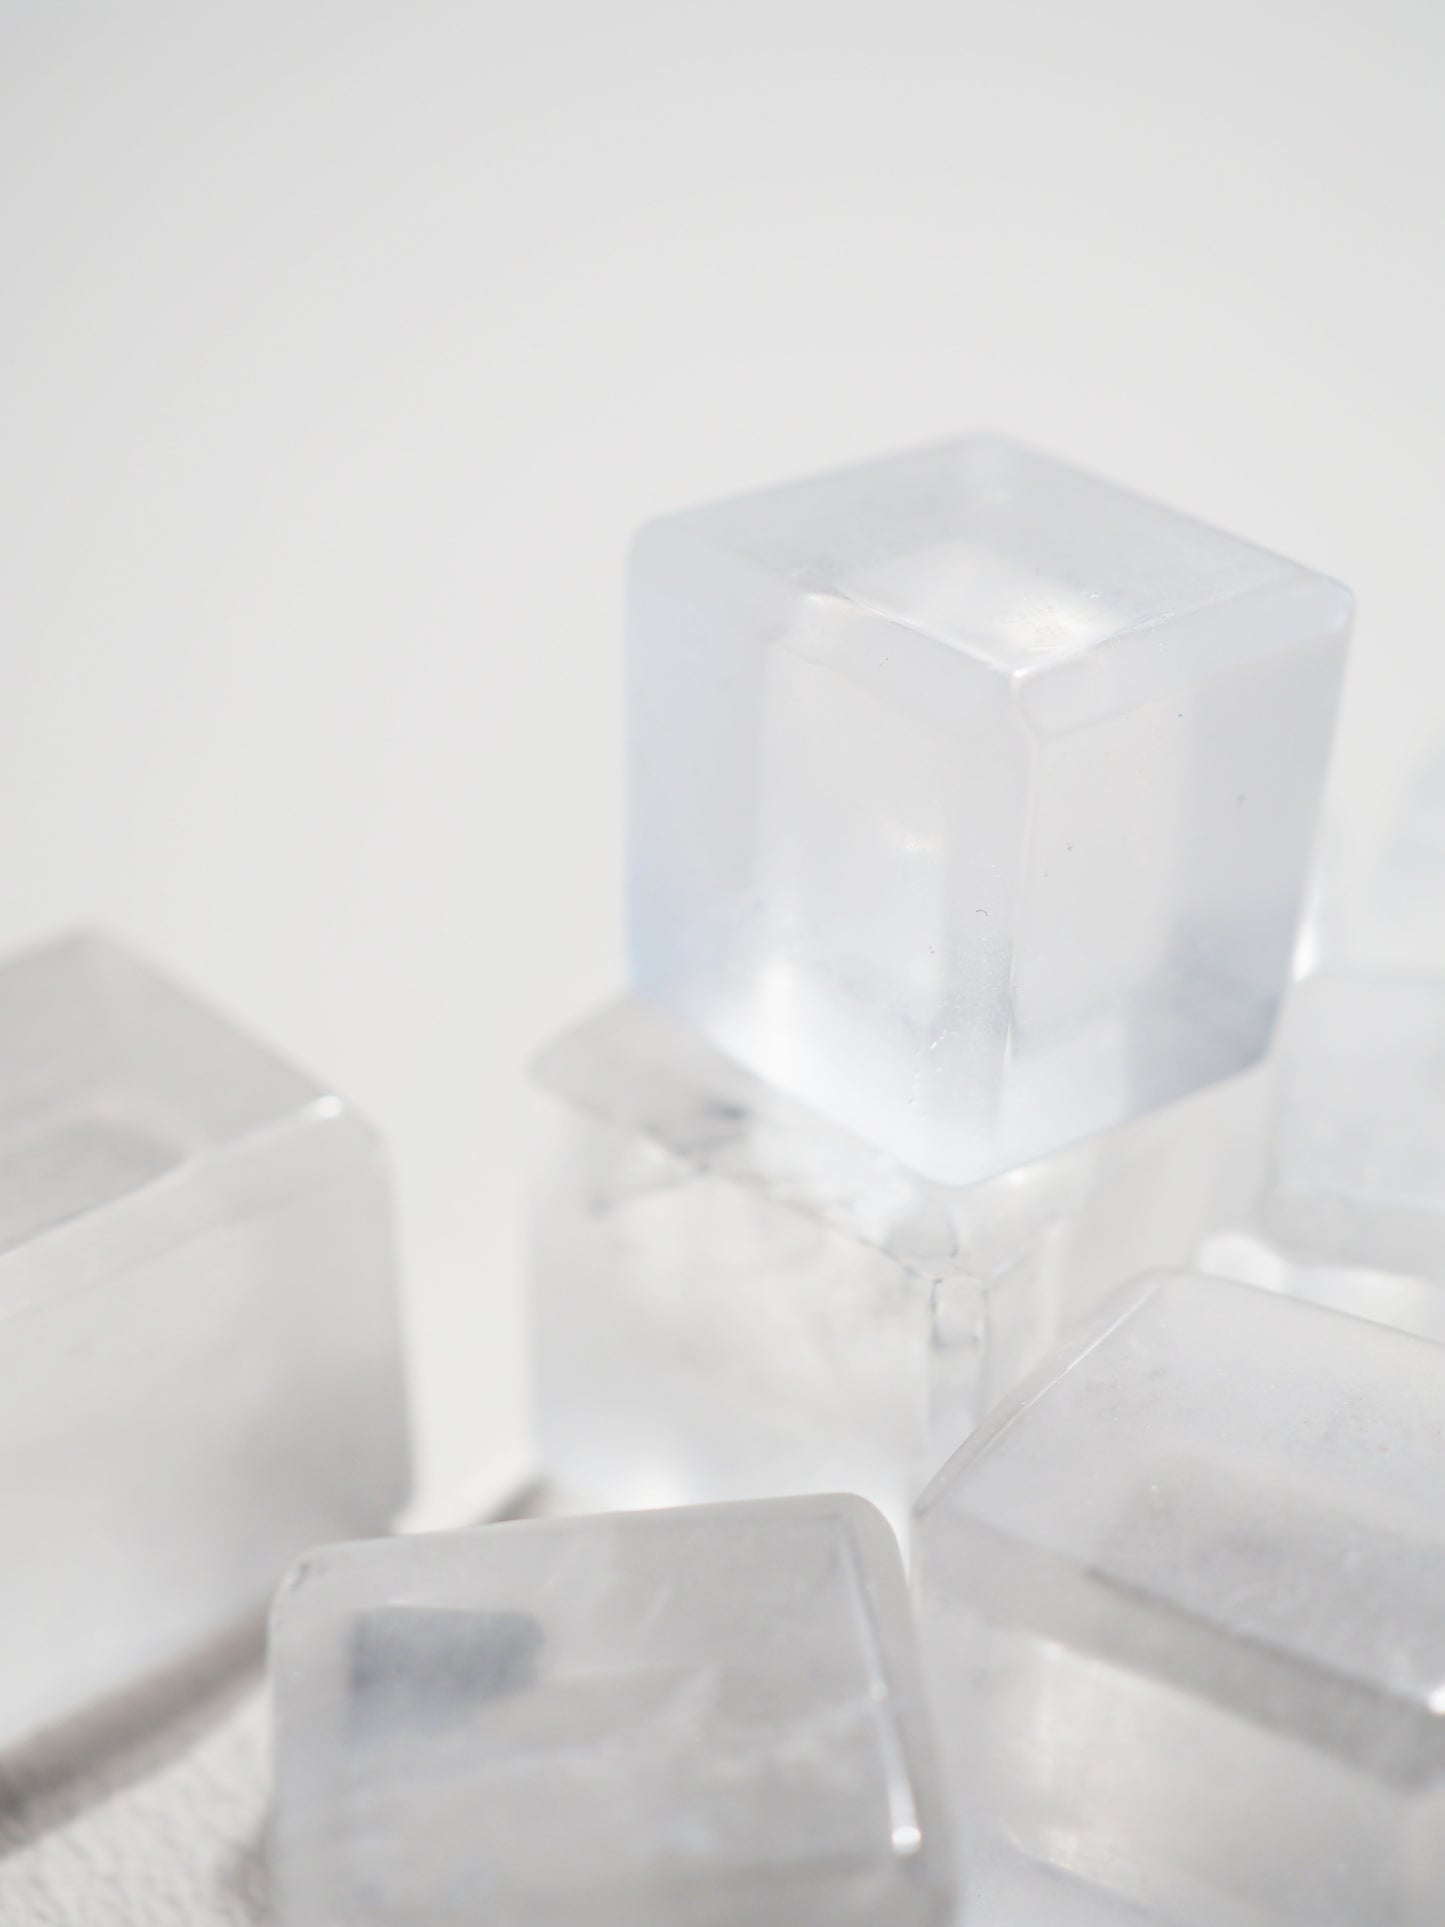 Bergkristall Eis Würfel  . Clear Quartz Ice Cube ca. 2 cm - aus China